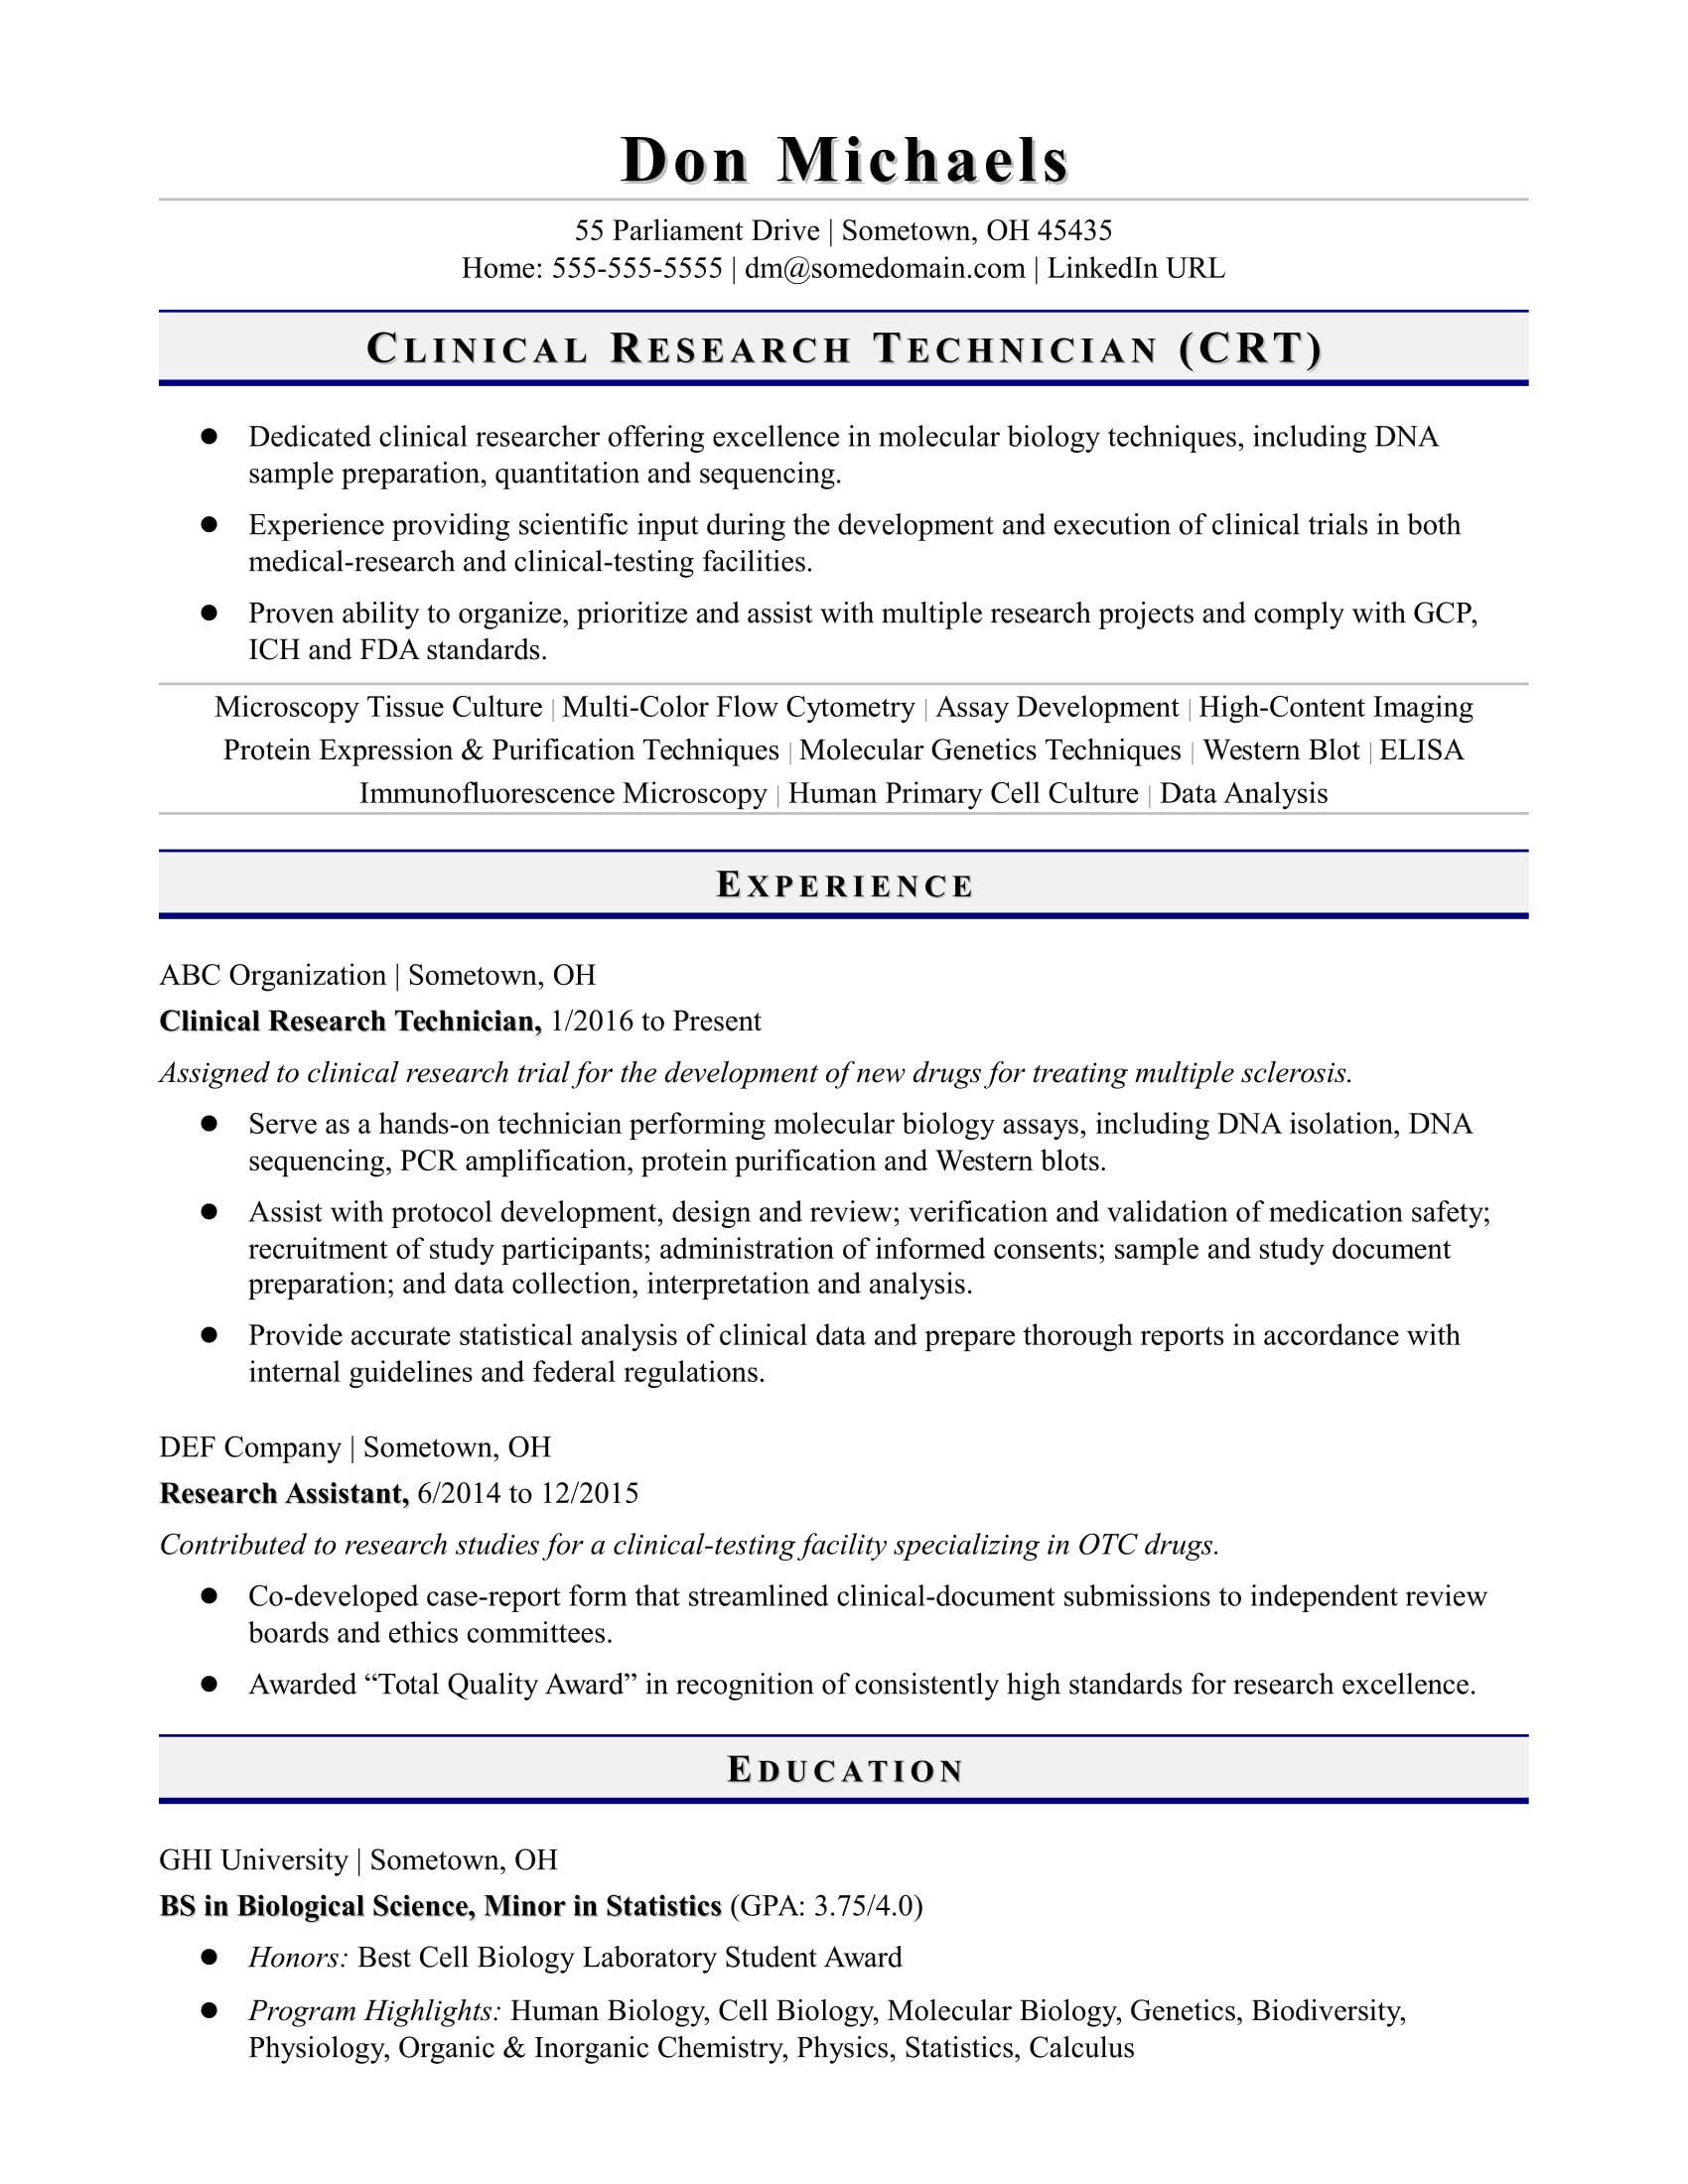 Sample Resume for Lab Technician Entry Level Entry-level Research Technician Resume Sample Monster.com